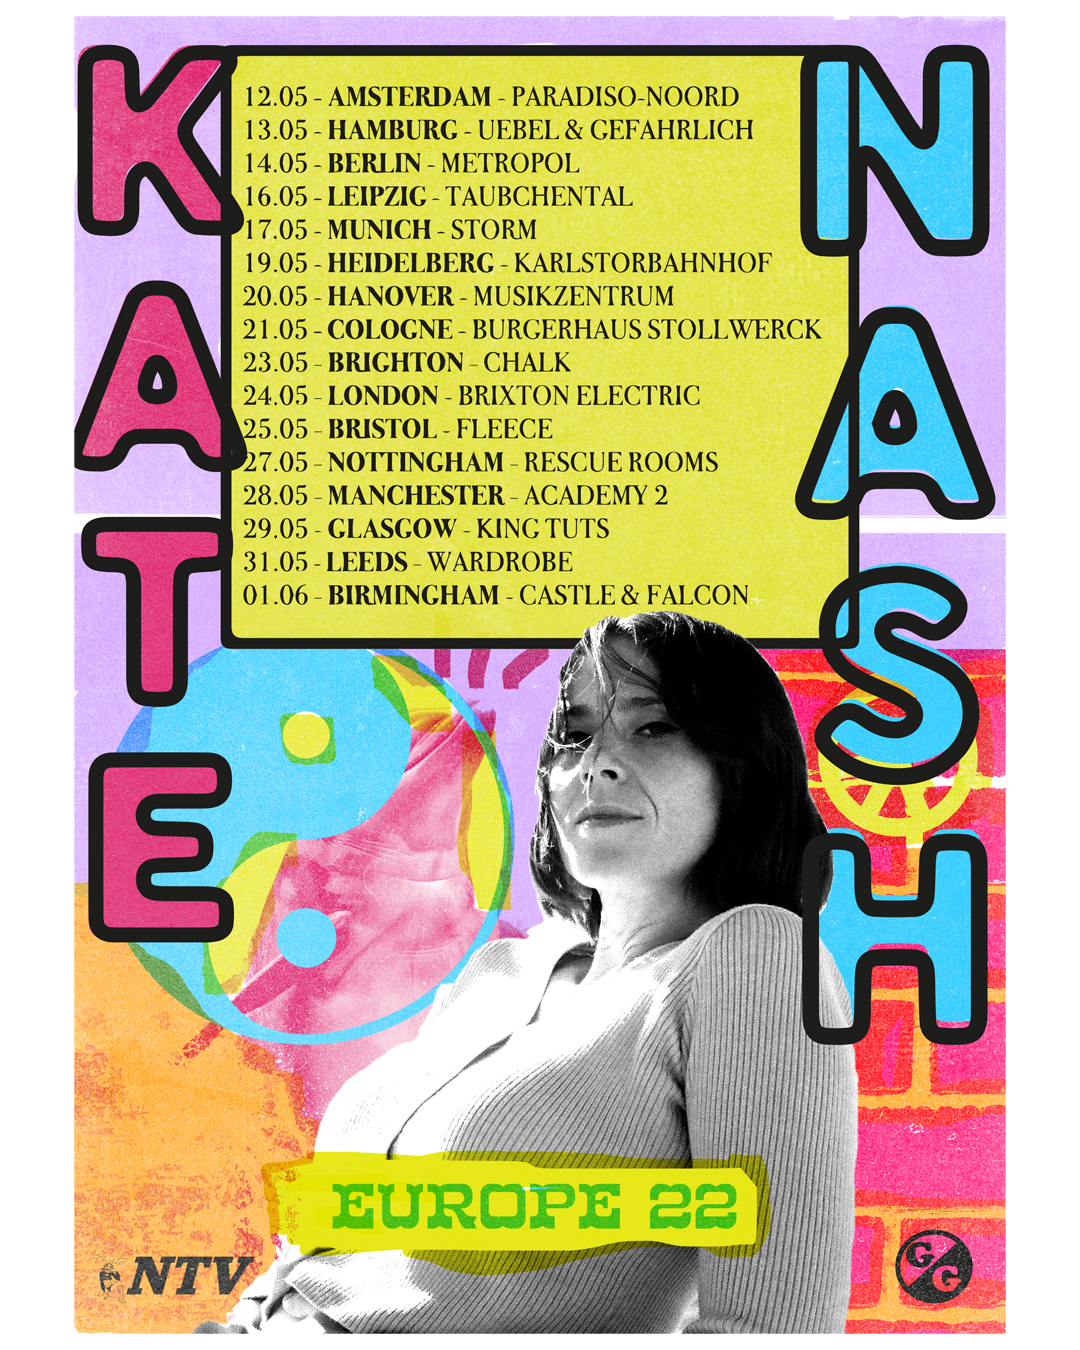 Kate Nash shares new single 'Horsie' and announces UK tour